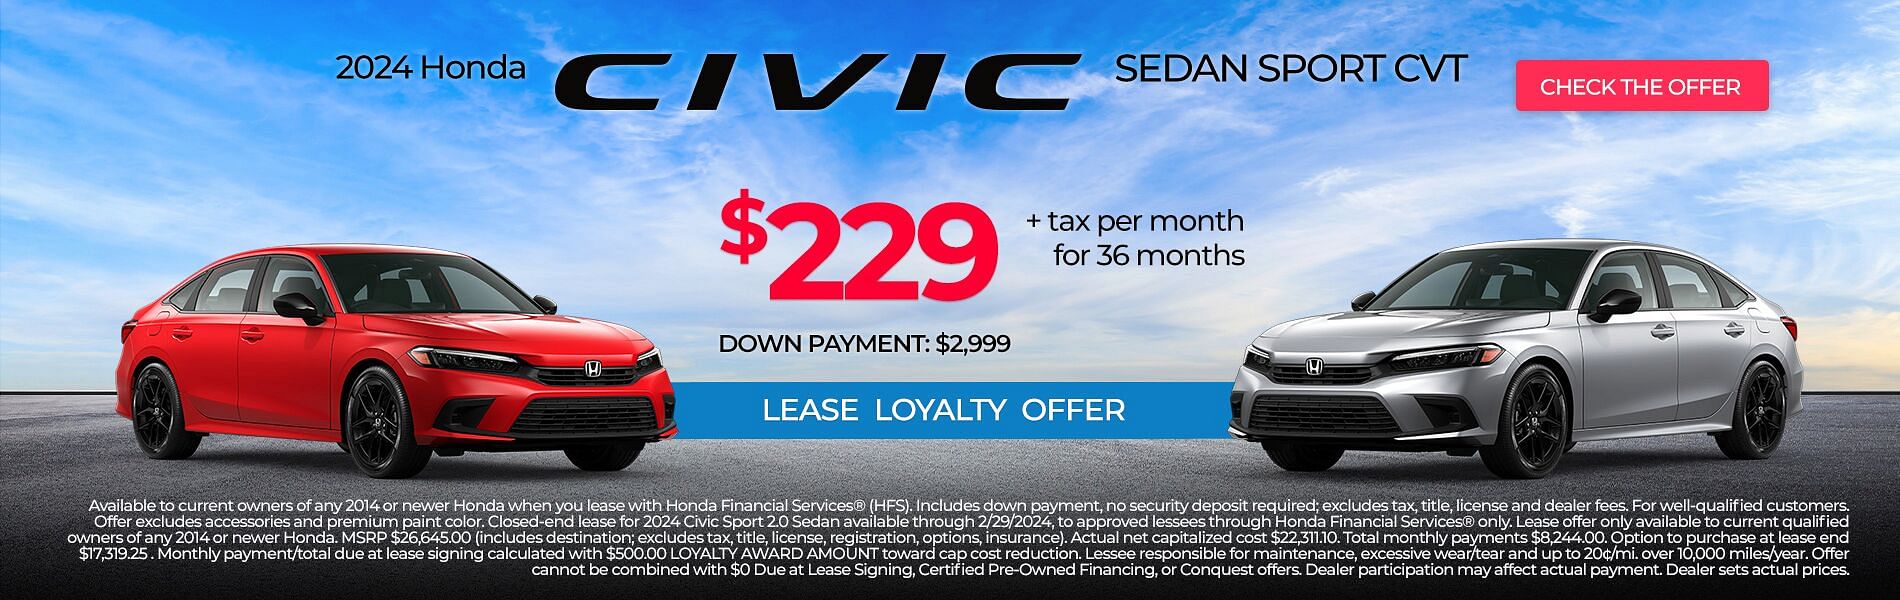 2024 Honda Civic Sedan Lease Special $229p/mo + tax